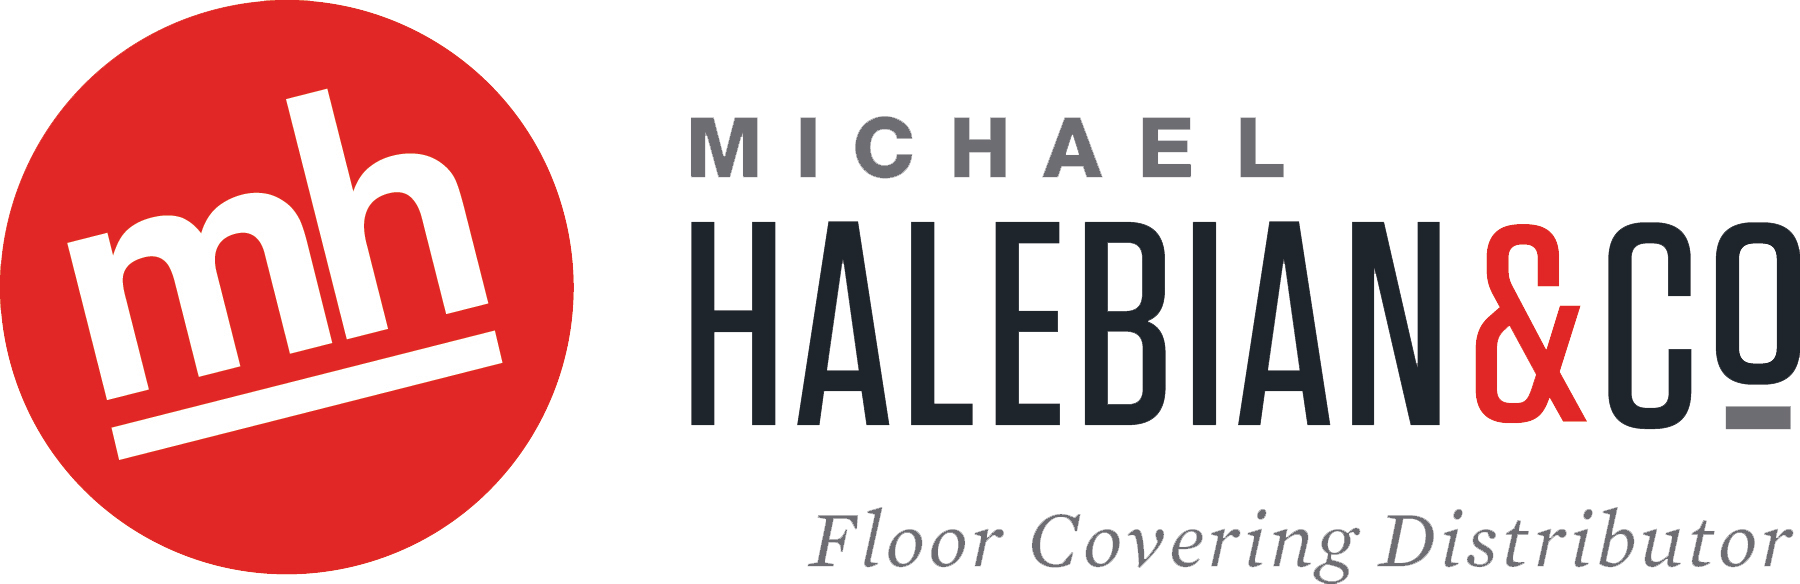 Michael Halebian and Company